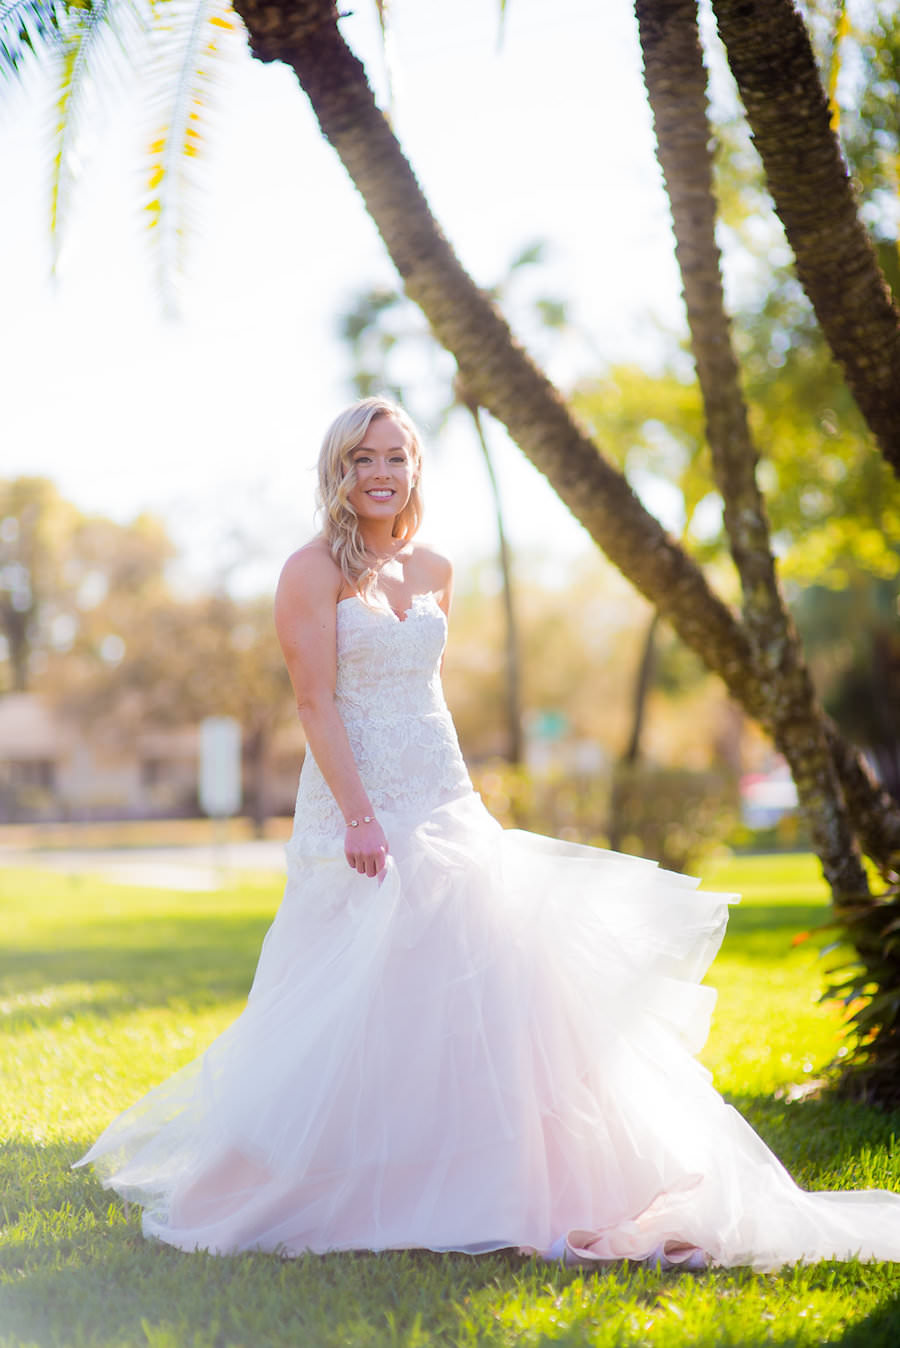 Bridal Wedding Portrait in Ivory and Blush Alvina Valenta Lace and Tulle Sweetheart Wedding Dress | Tampa Wedding Photographer Kera Photography